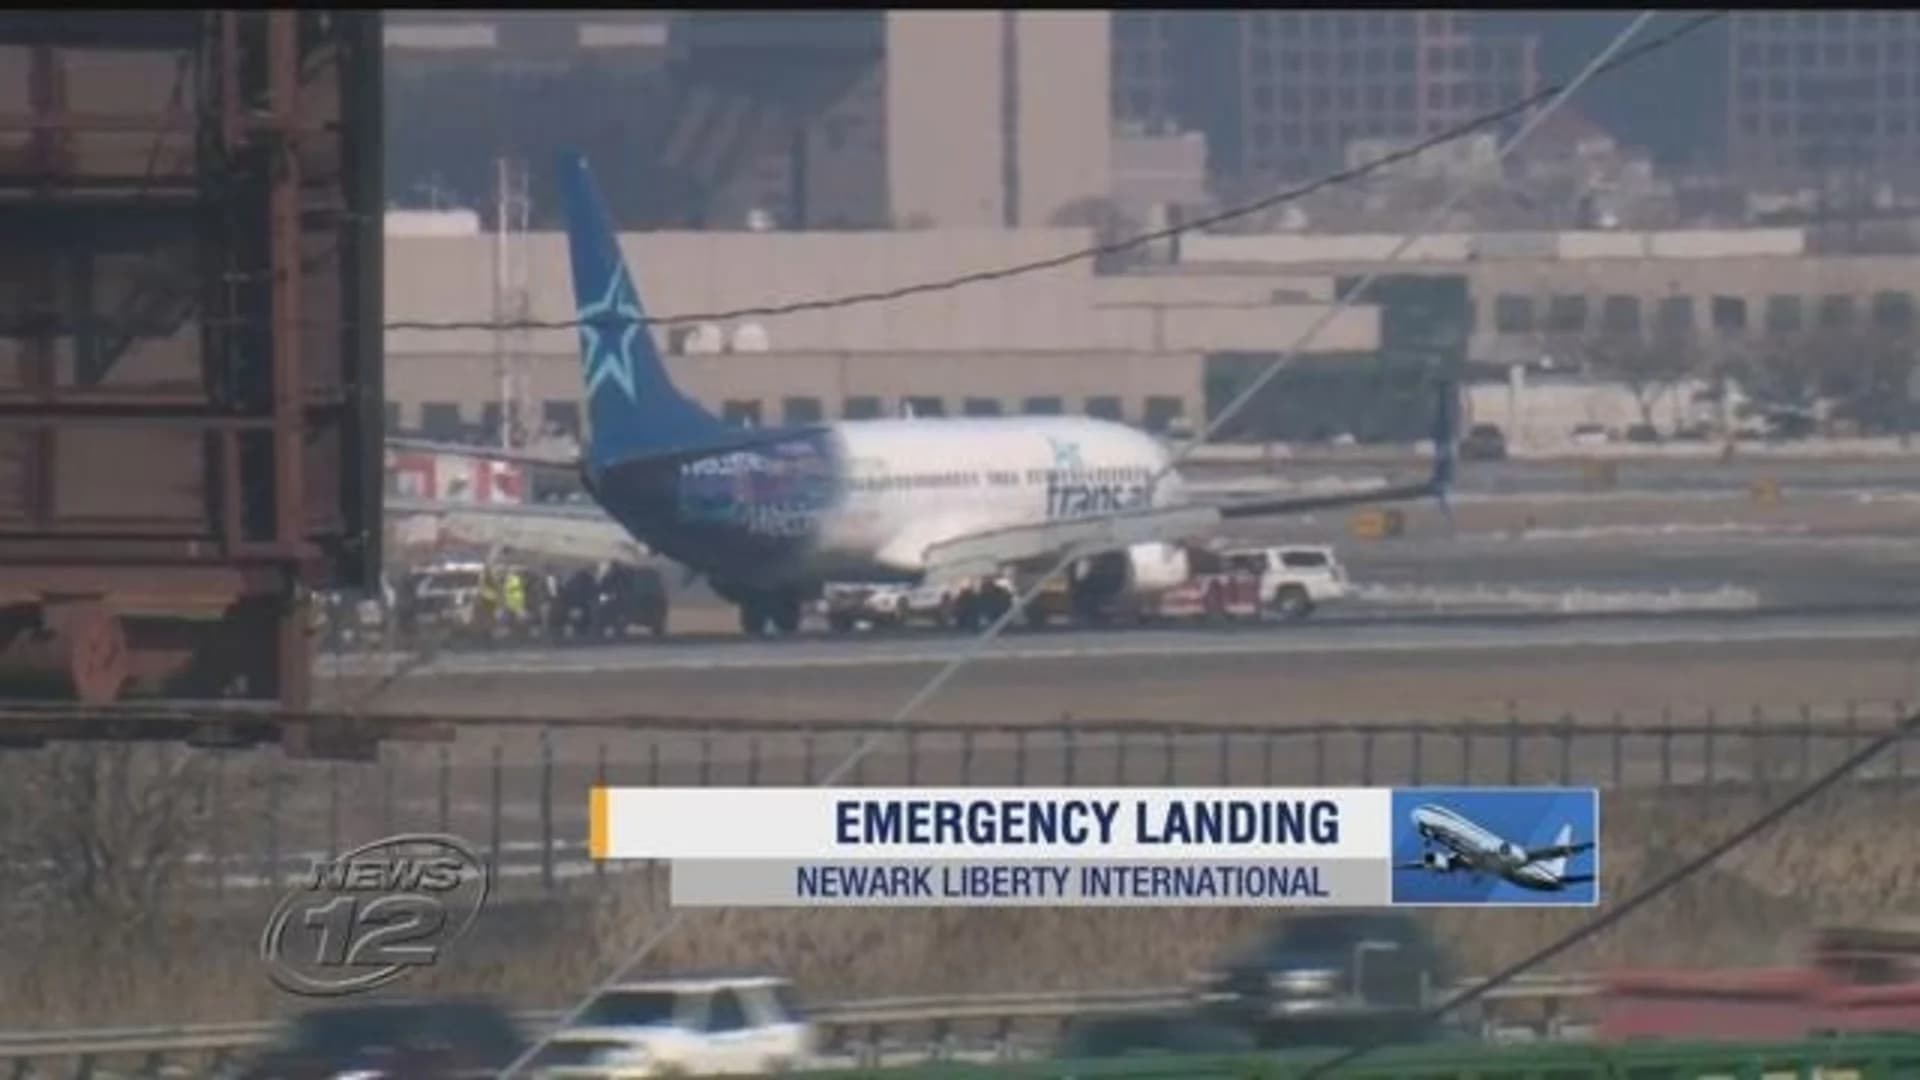 Officials: No fire found aboard flight that made emergency landing at Newark